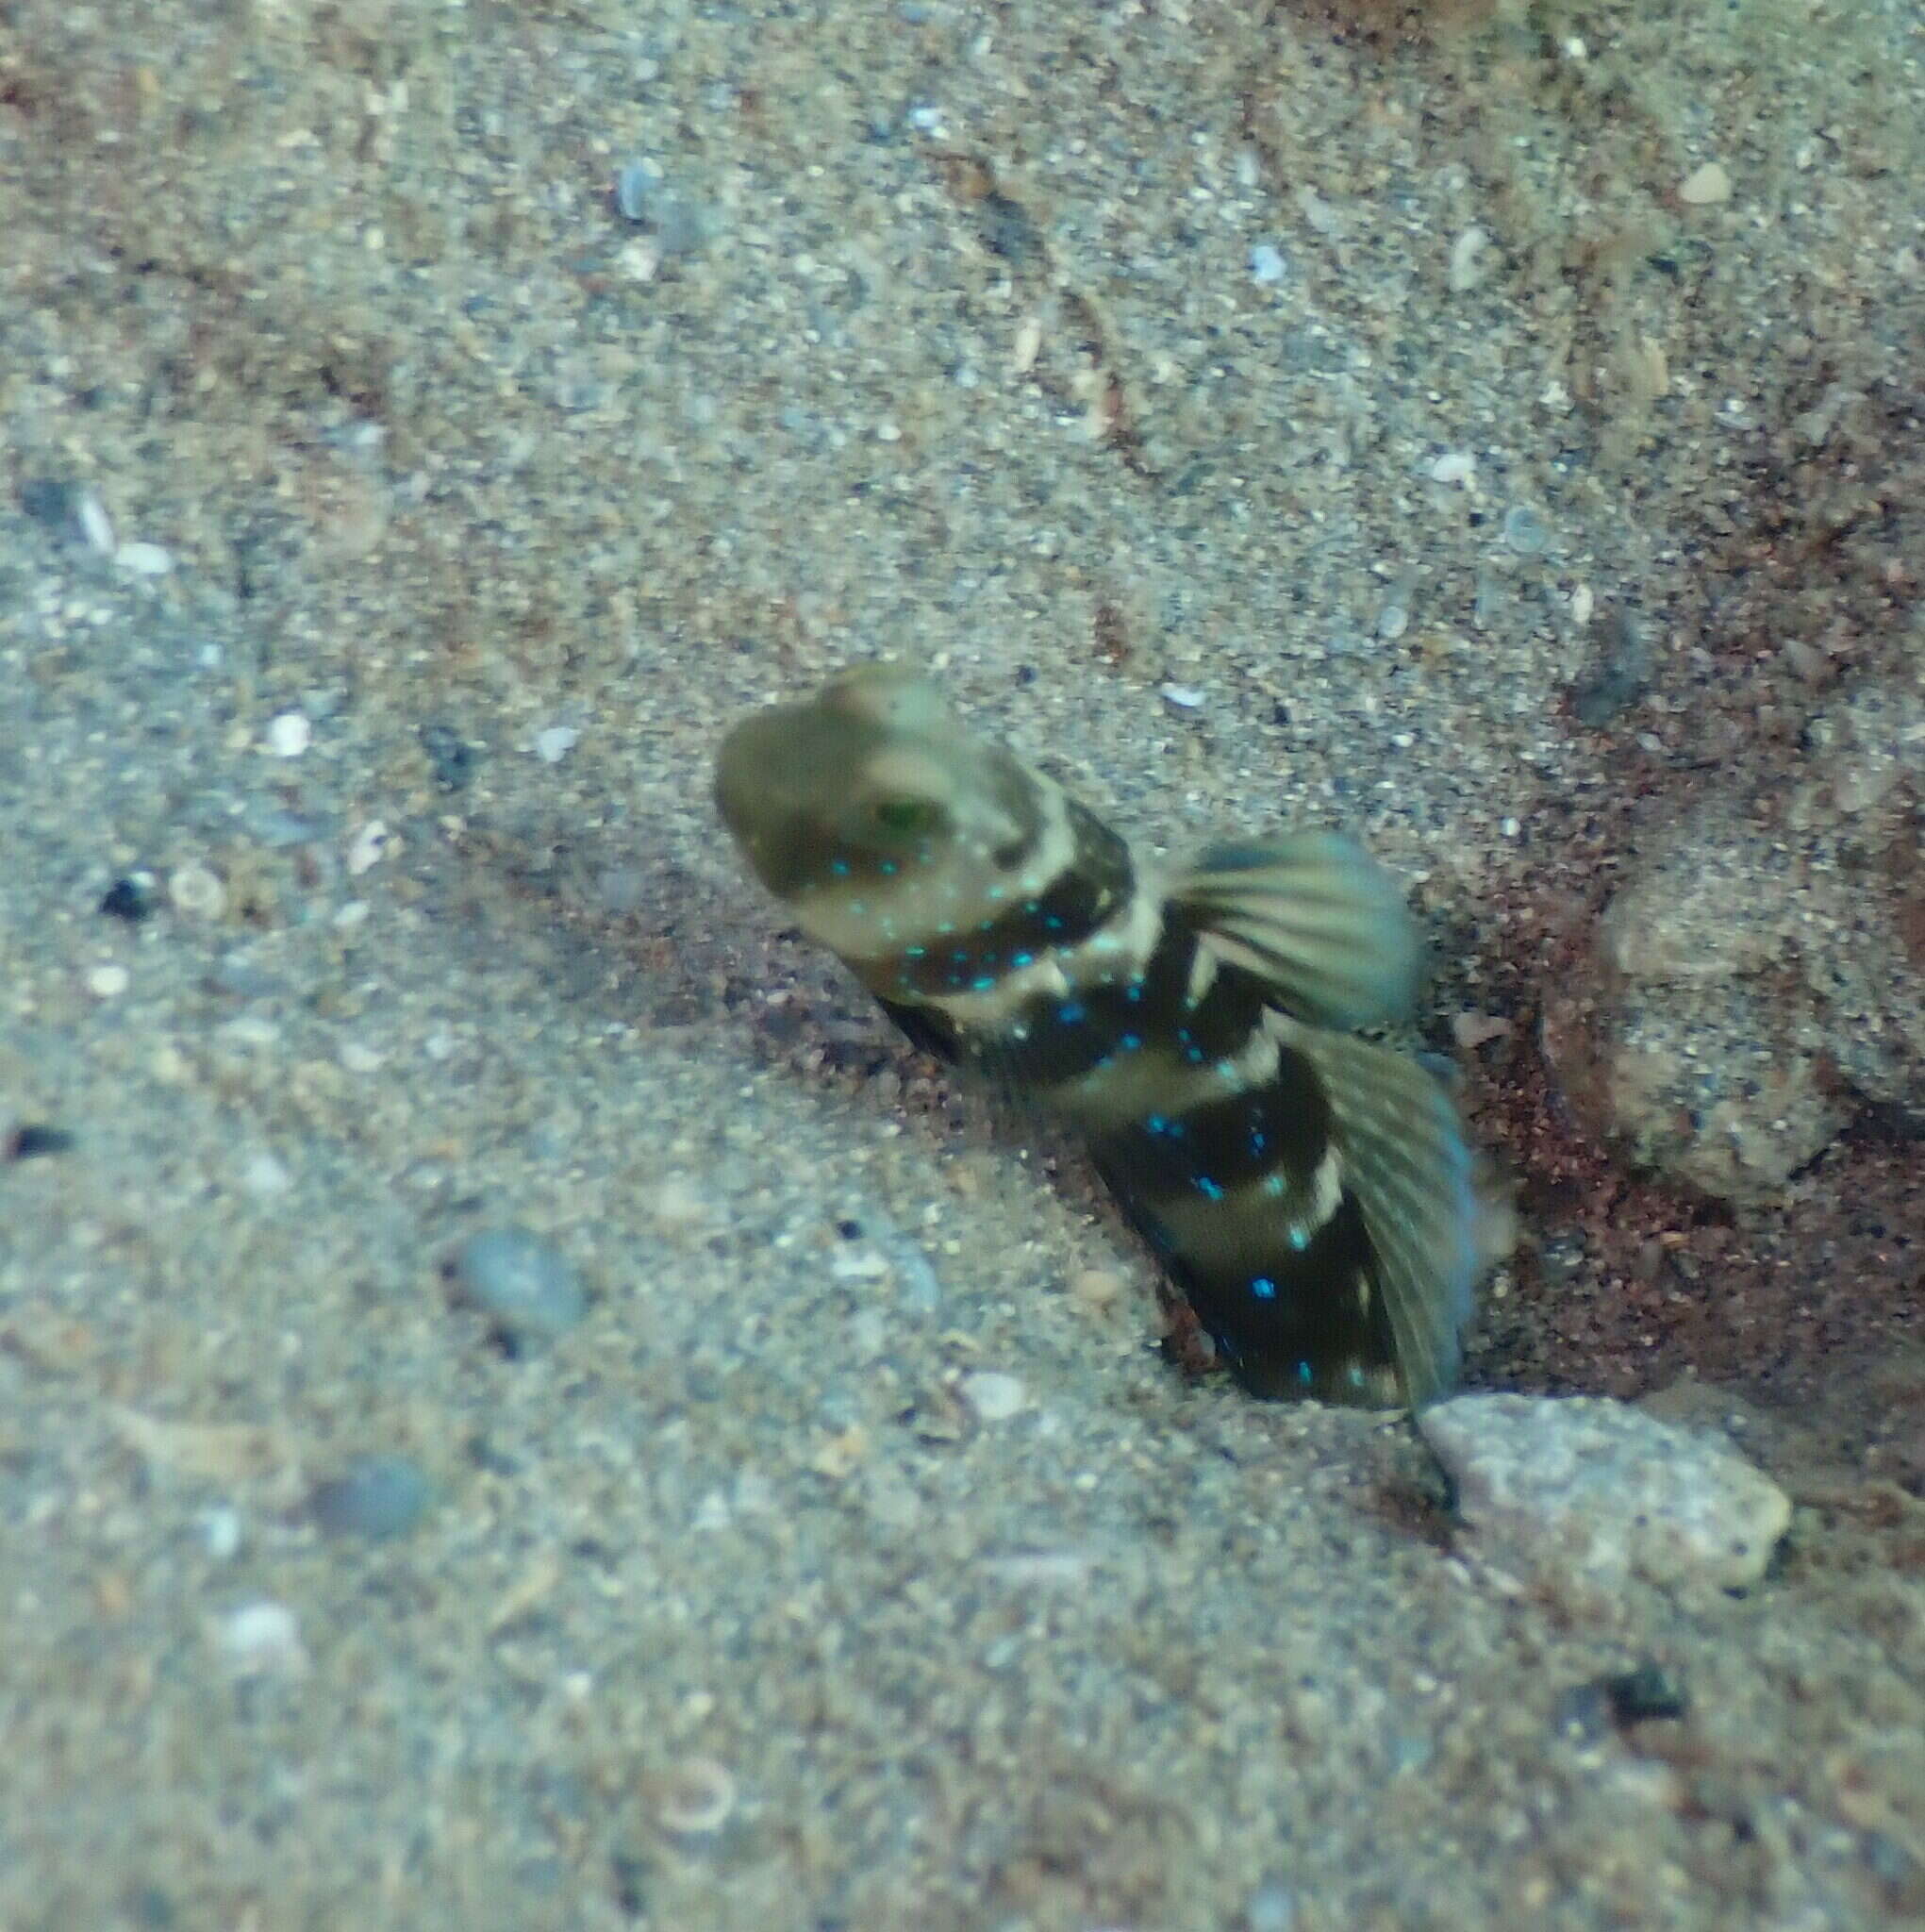 Image of Y-bar shrimp goby